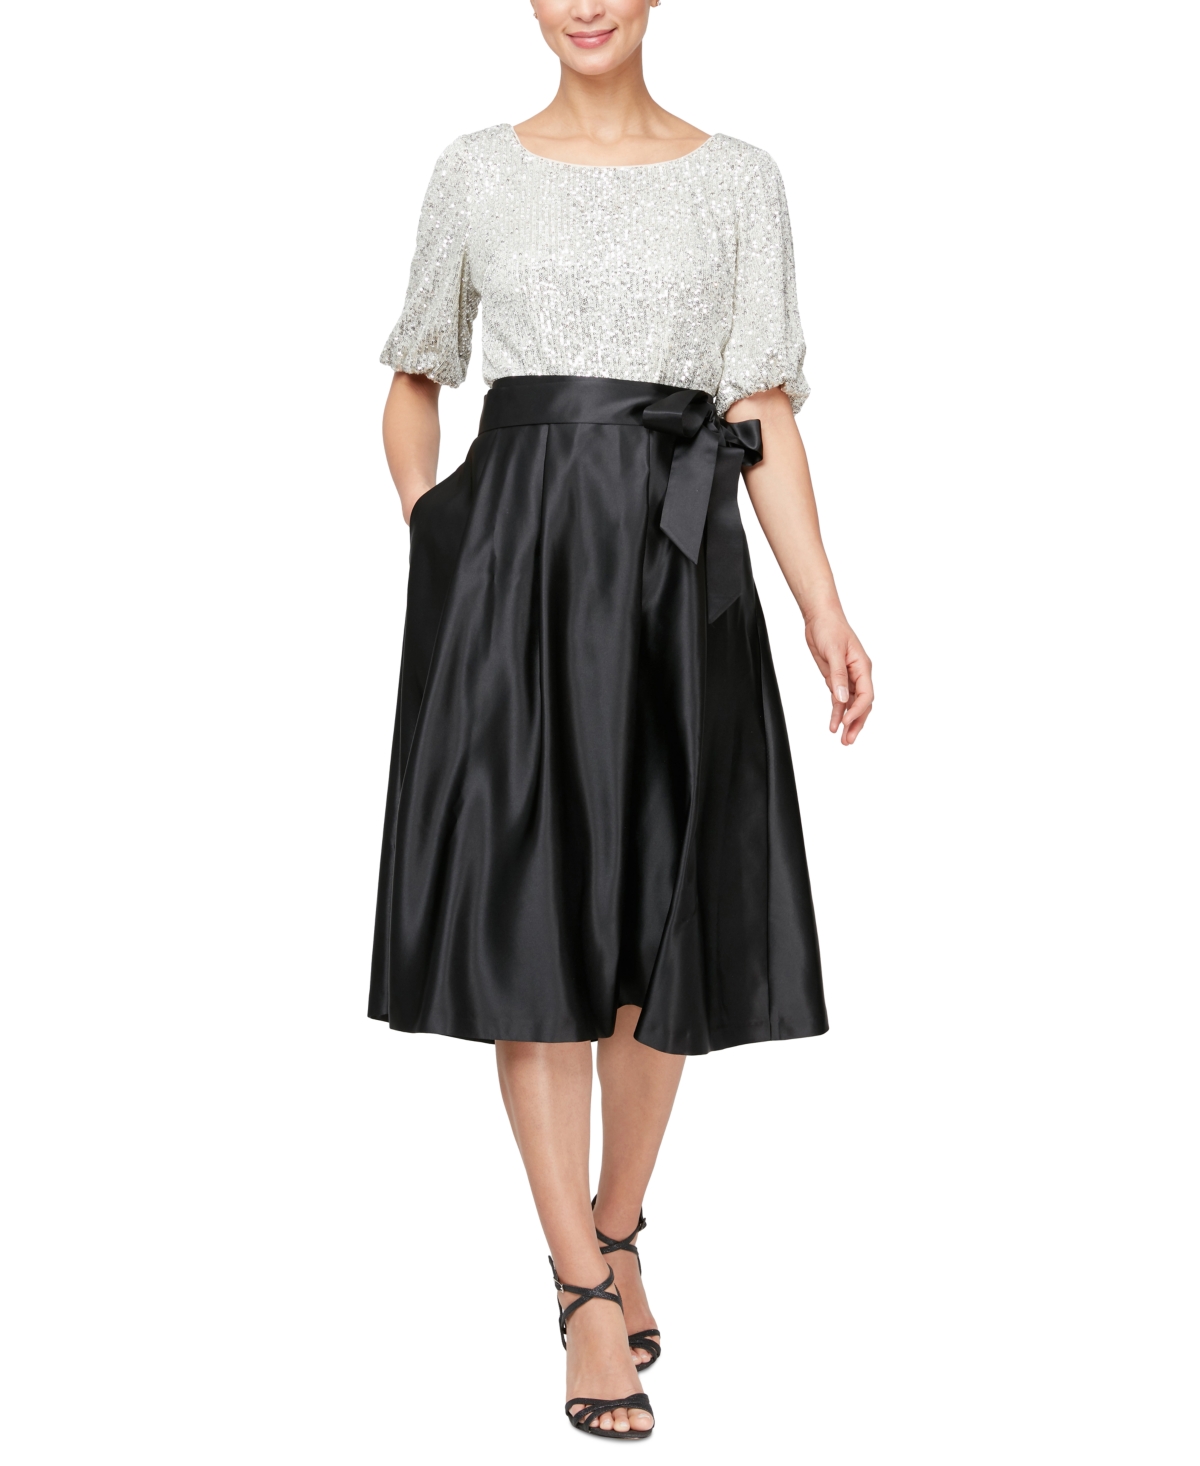 Women's Tea-Length A-Line Ball Skirt - Black